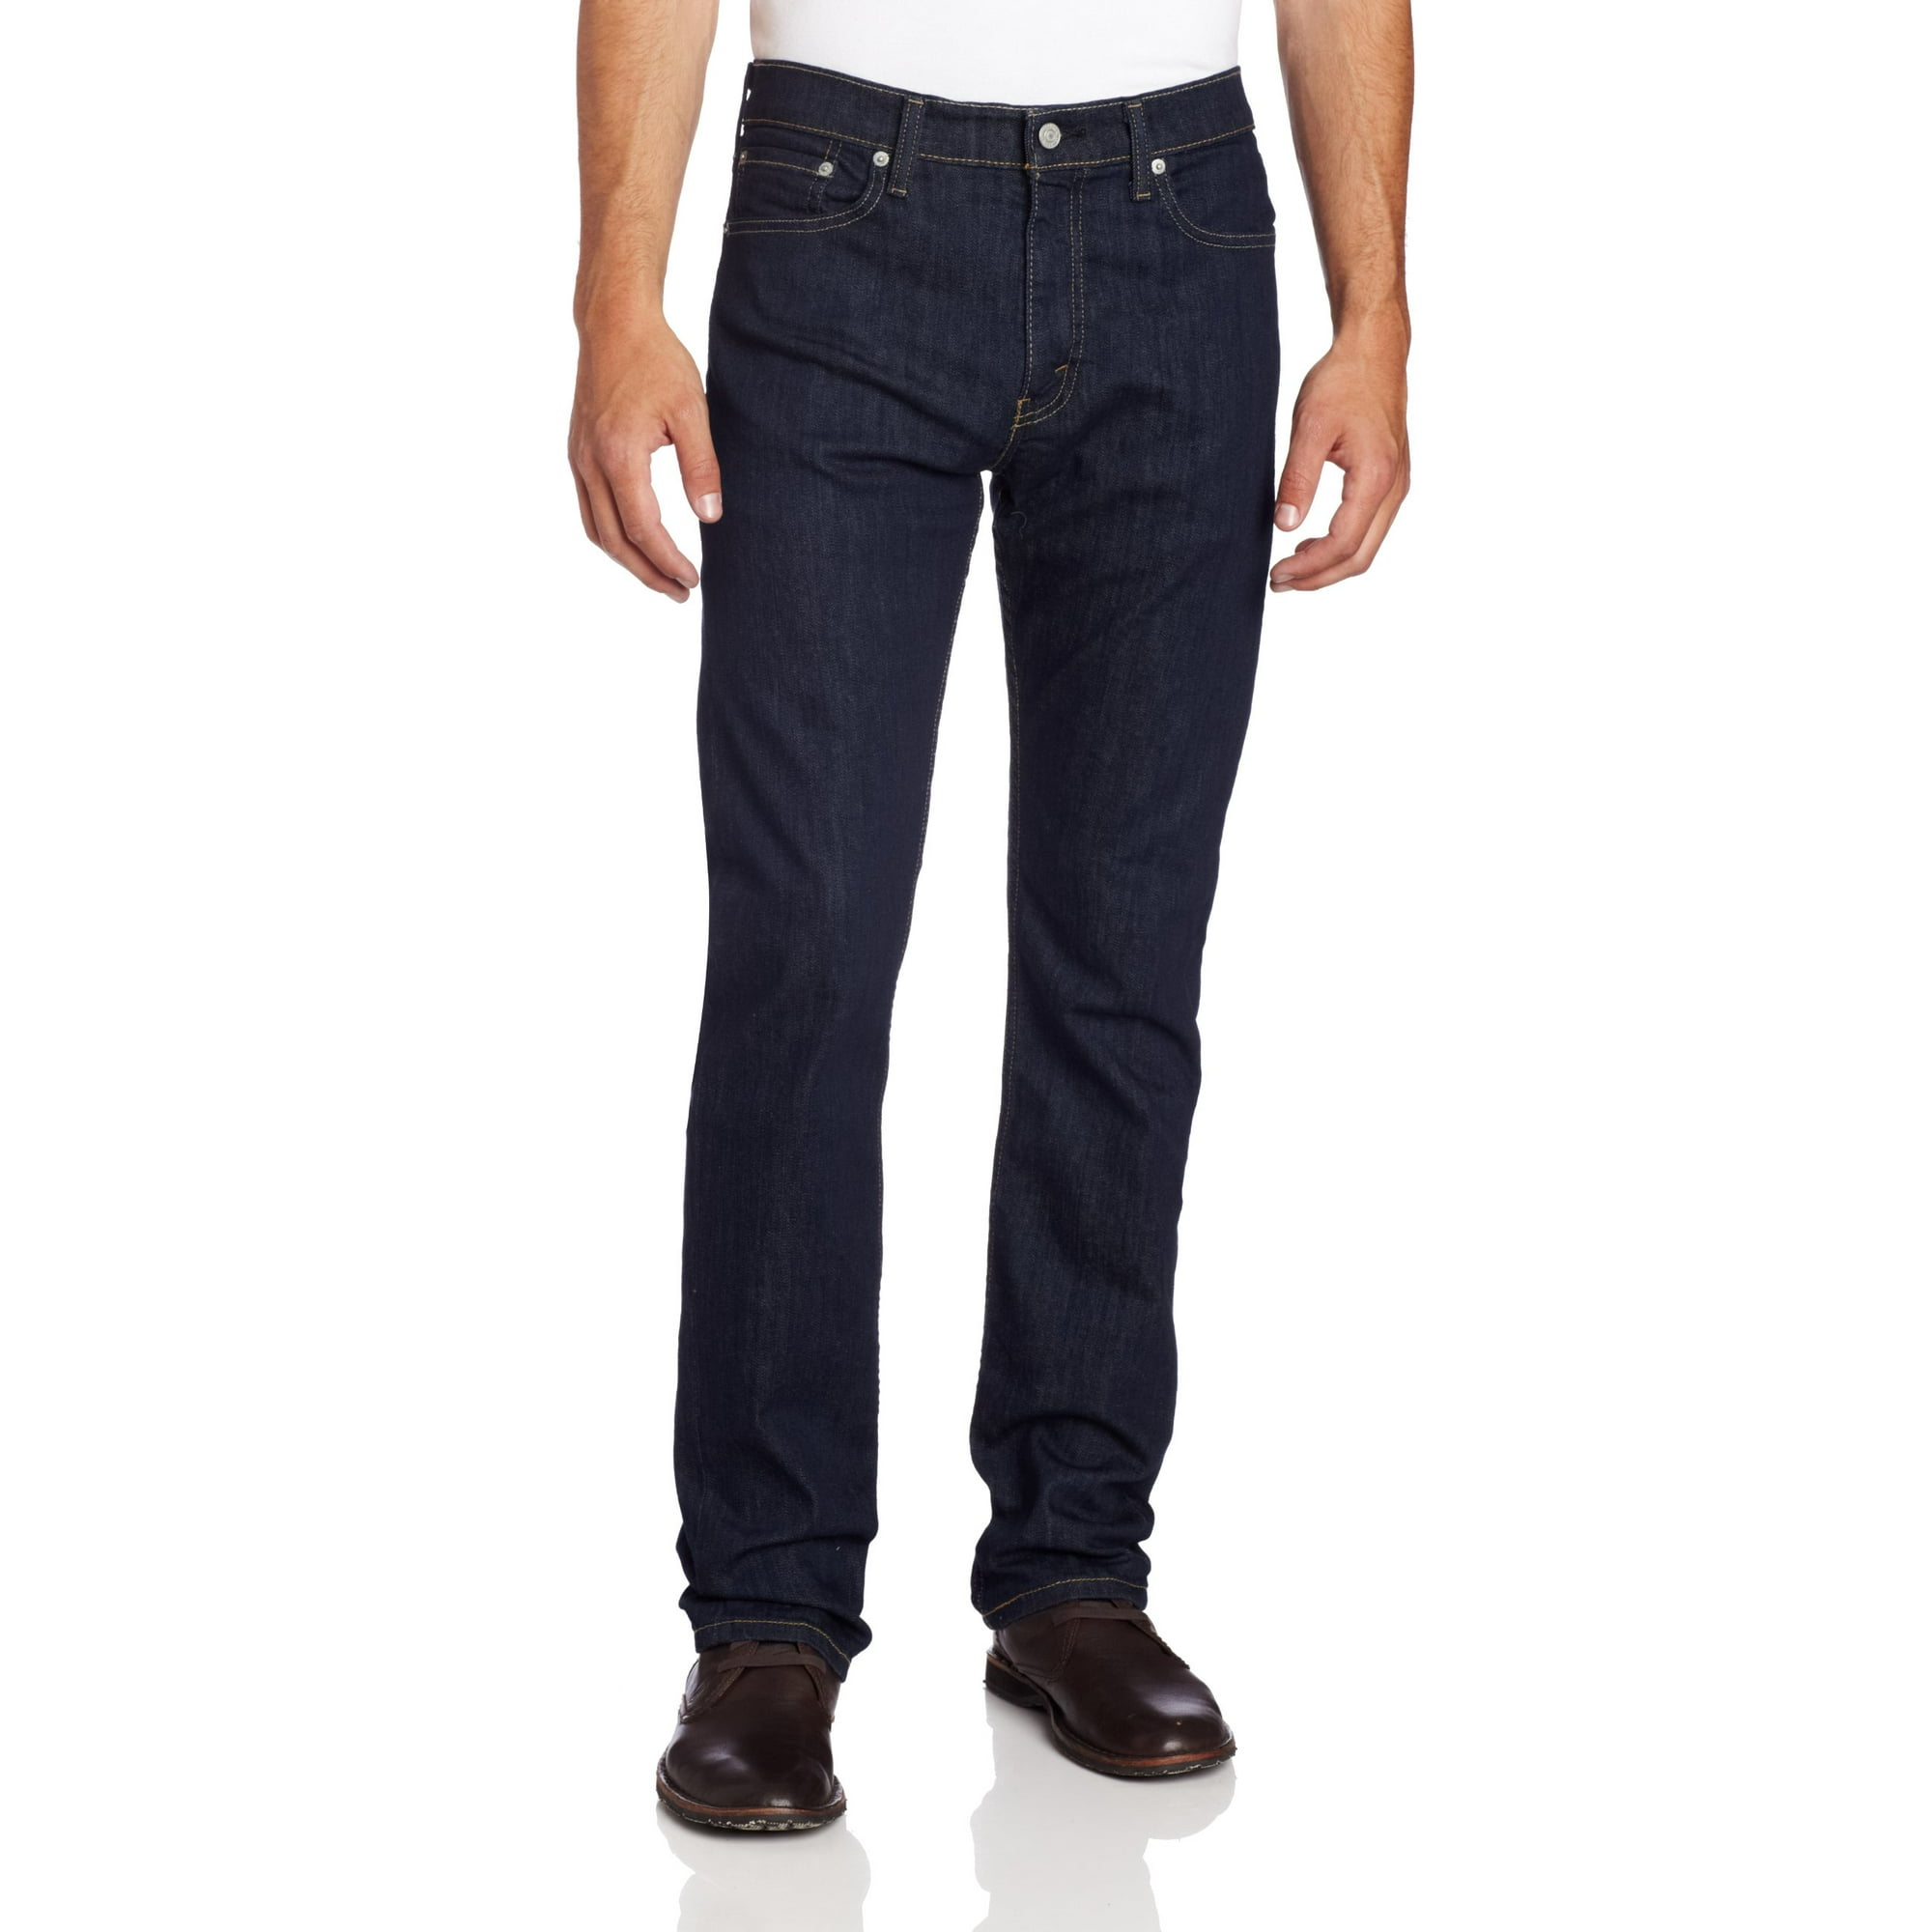 Levi's Men's 513 Stretch Slim Straight Jean, Bastion, 33x34 | Walmart Canada